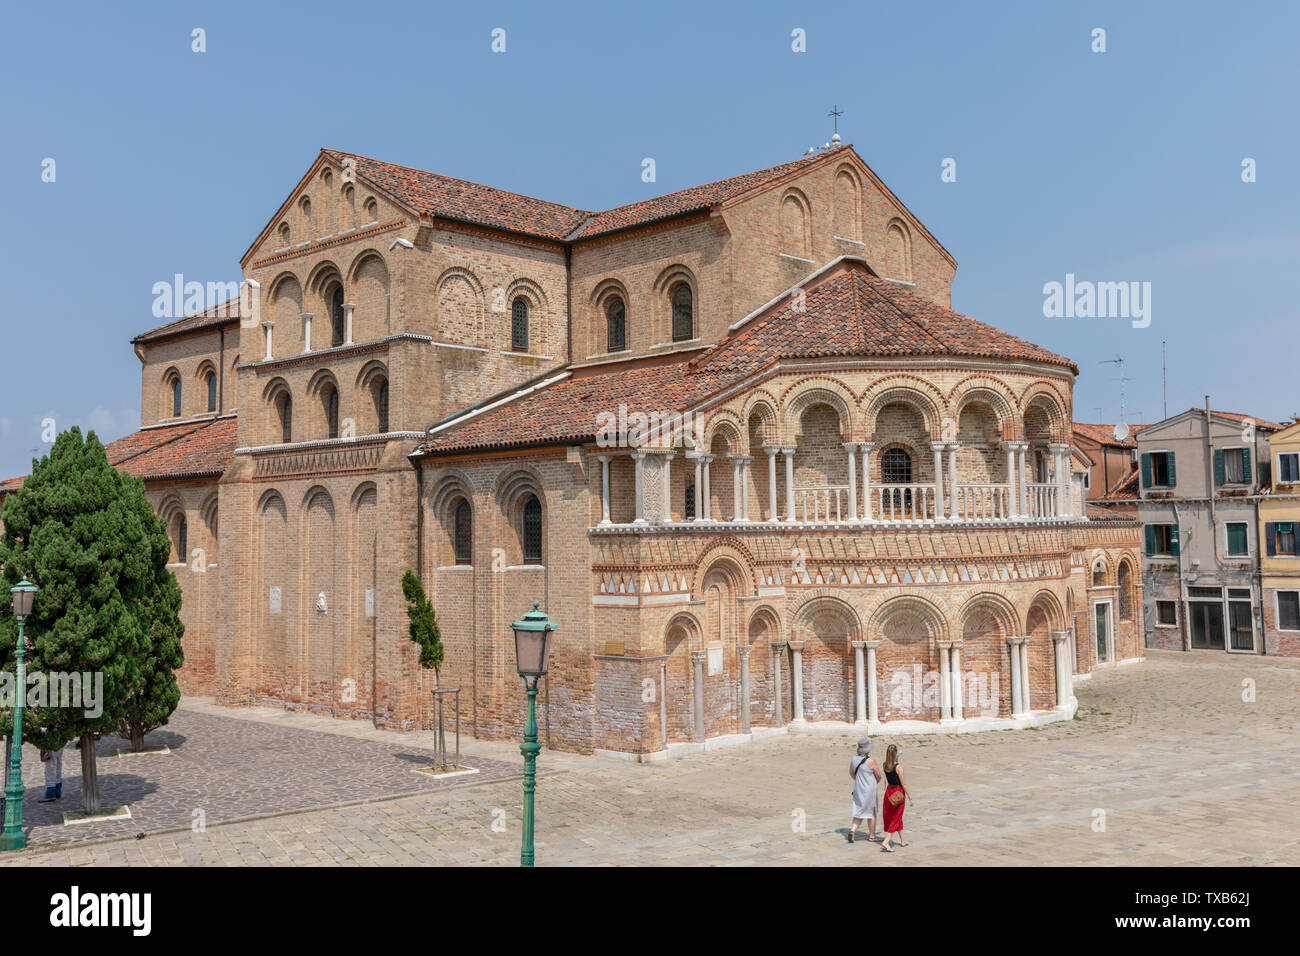 Murano, Venice, Italy - July 2, 2018: Panoramic view of Church of Santa Maria e San Donato is a religious edifice located in Murano. It is known for i Stock Photo